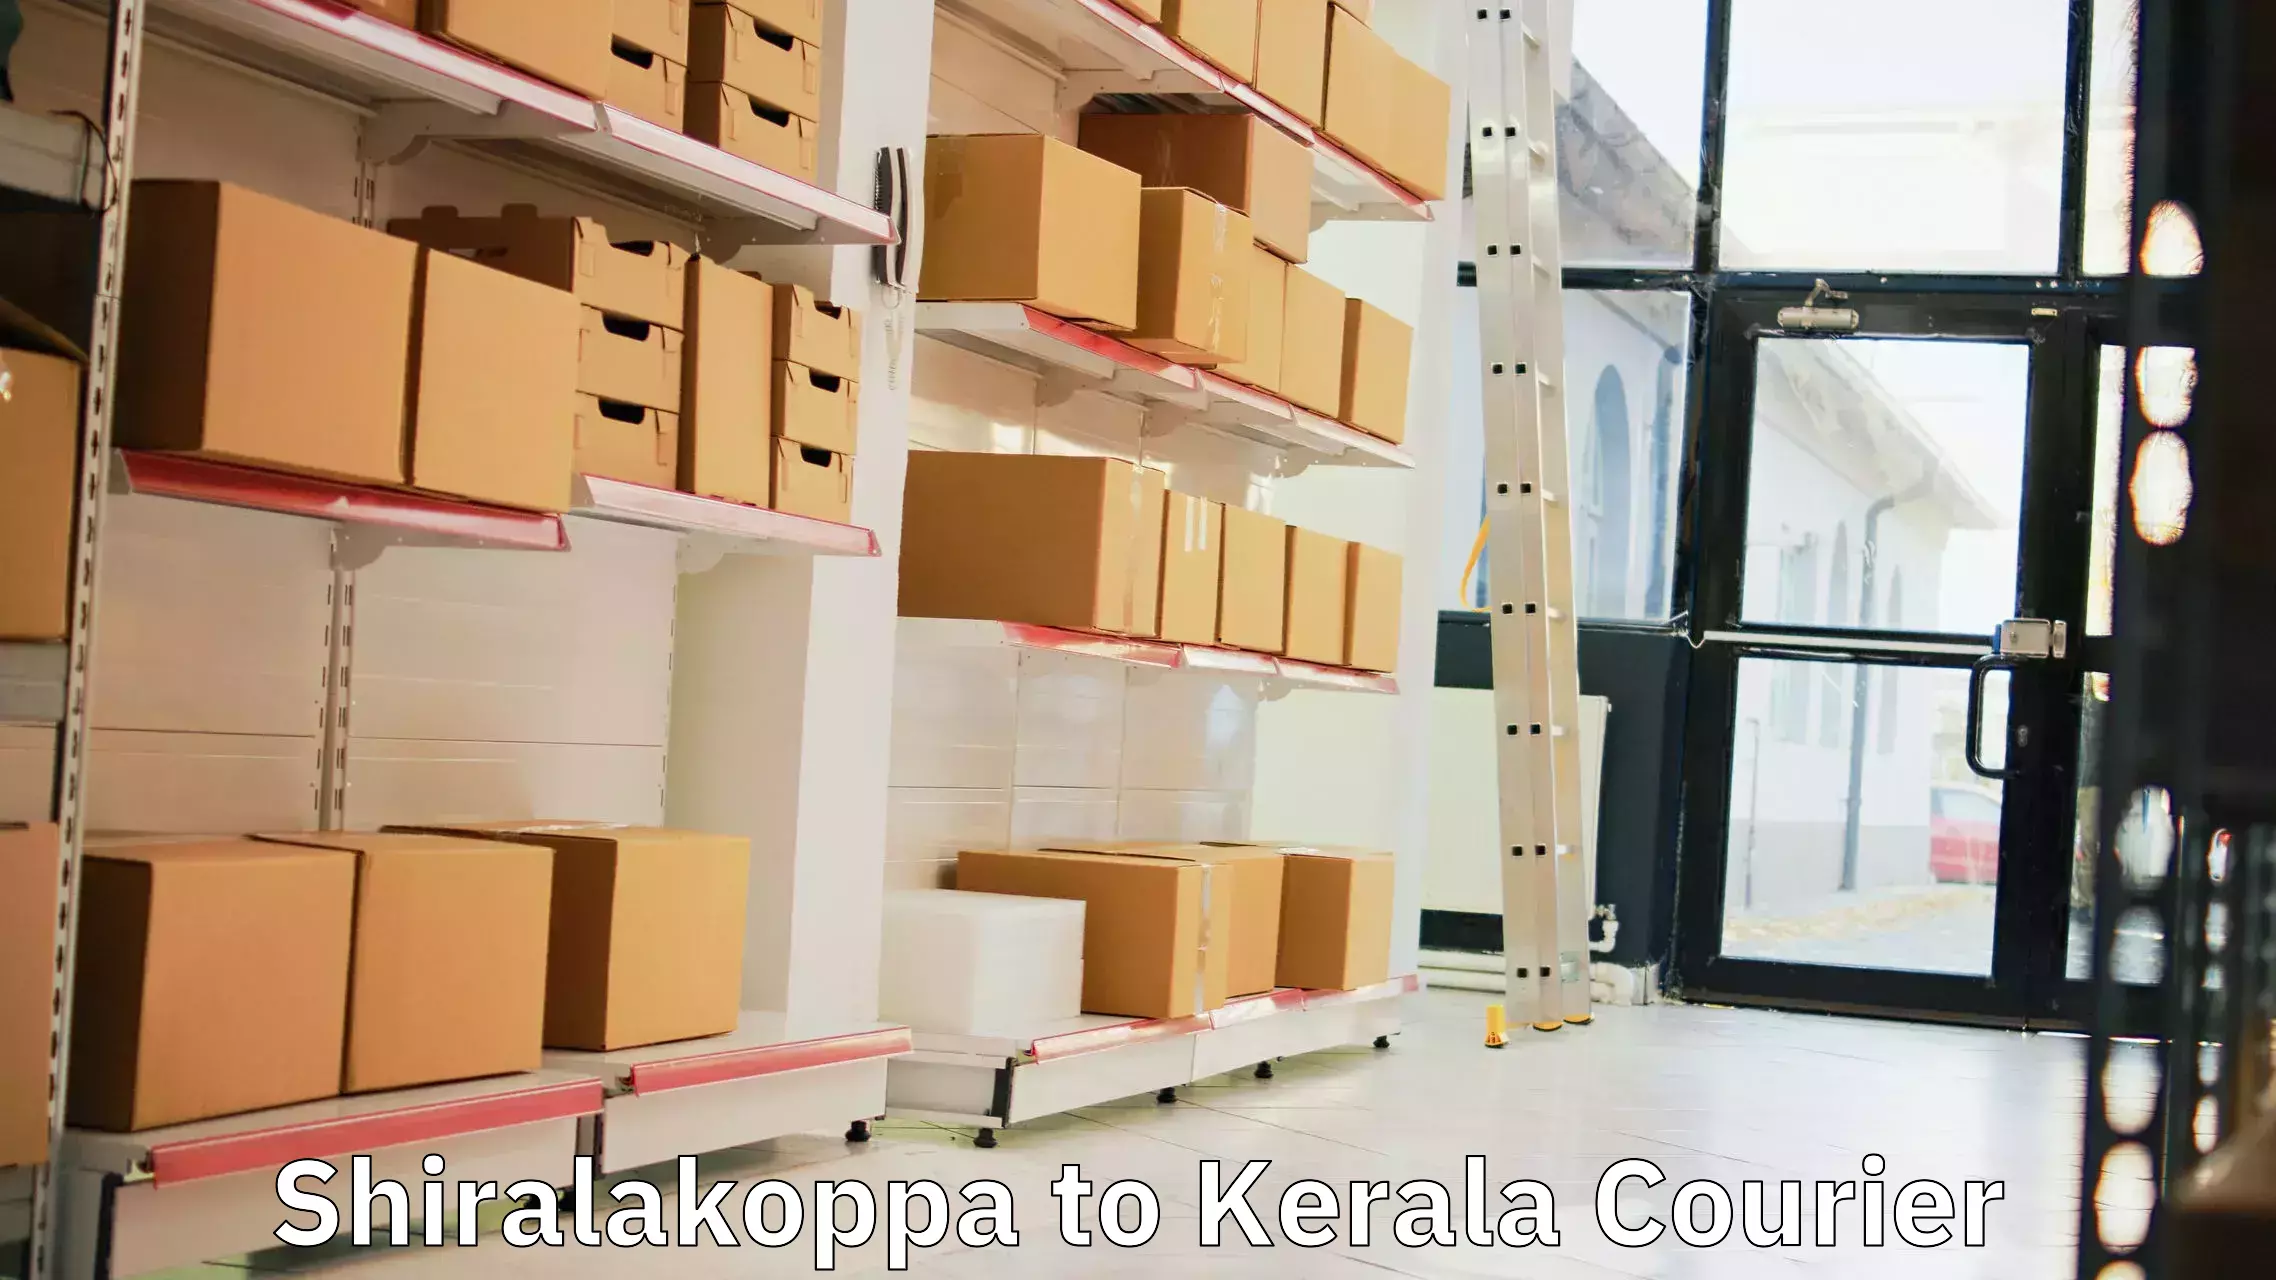 Local courier options Shiralakoppa to Kerala